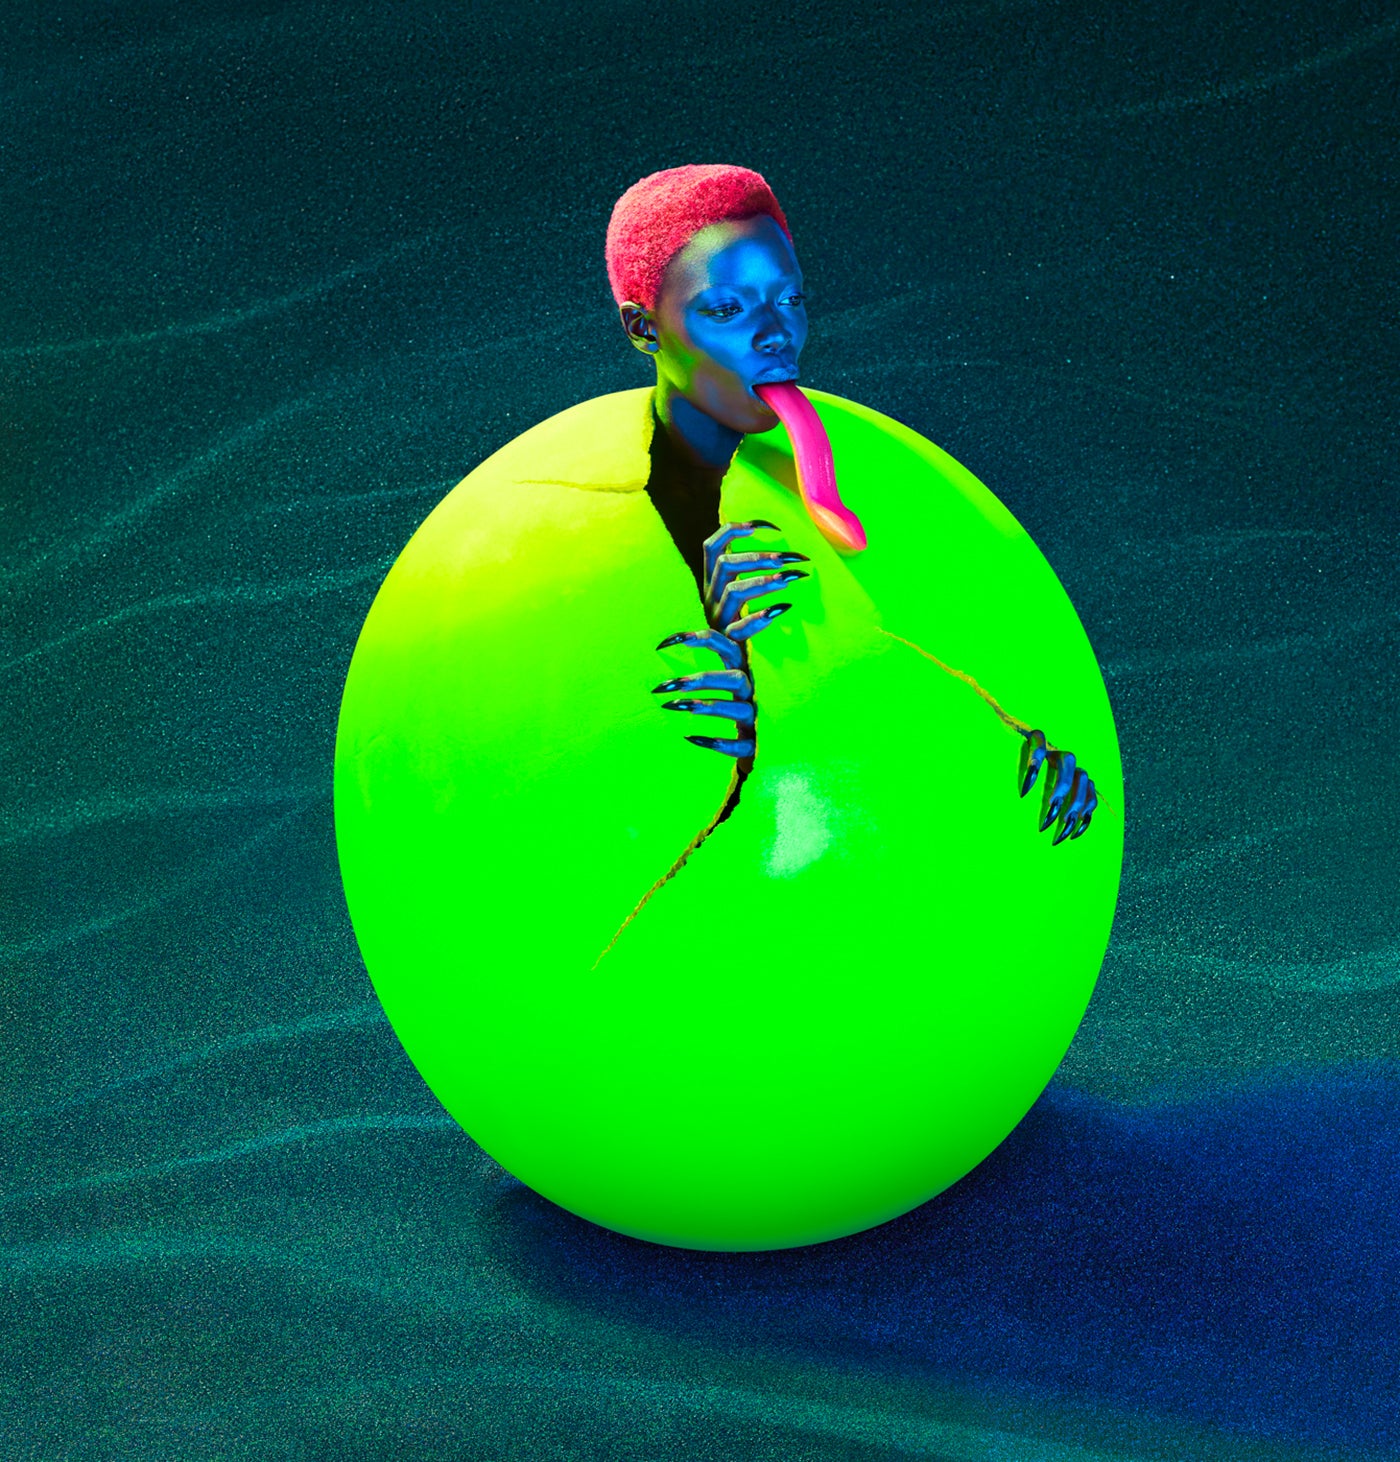 Model in a neon egg. From Venus beach from Pol Kurucz